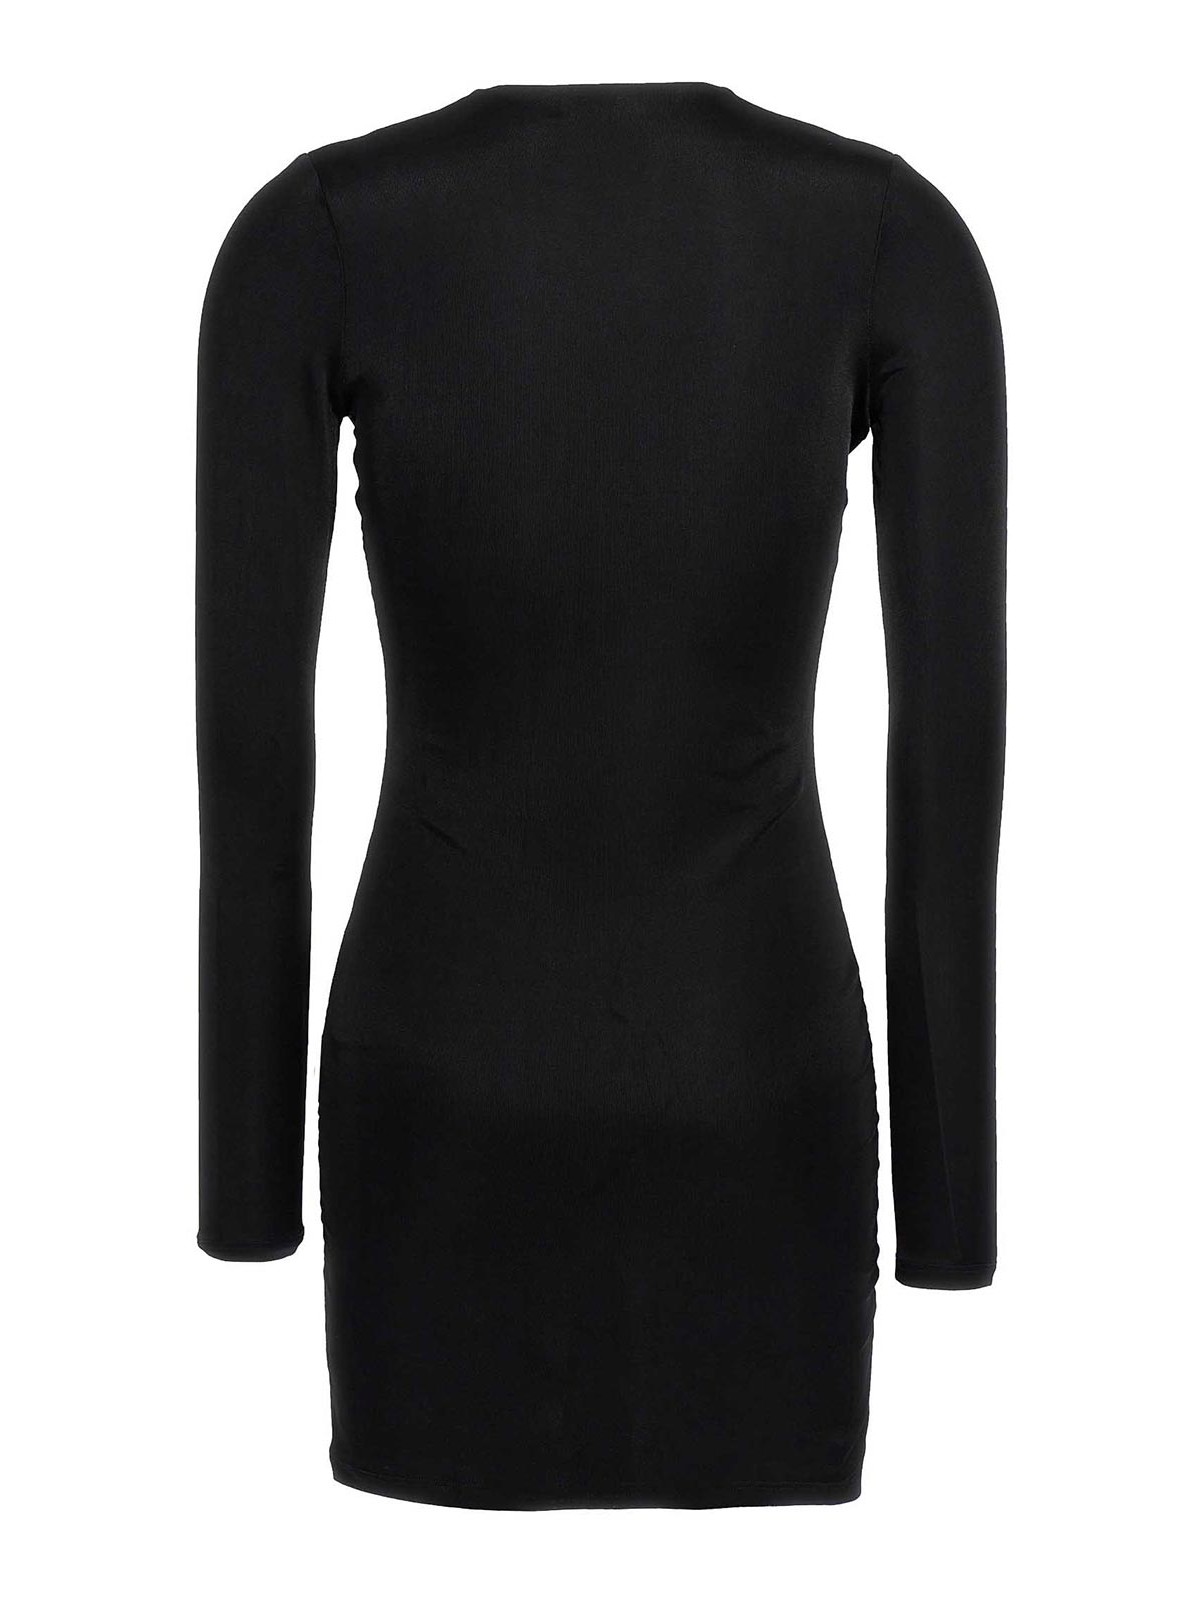 Shop Louisa Ballou Helios Dress In Black